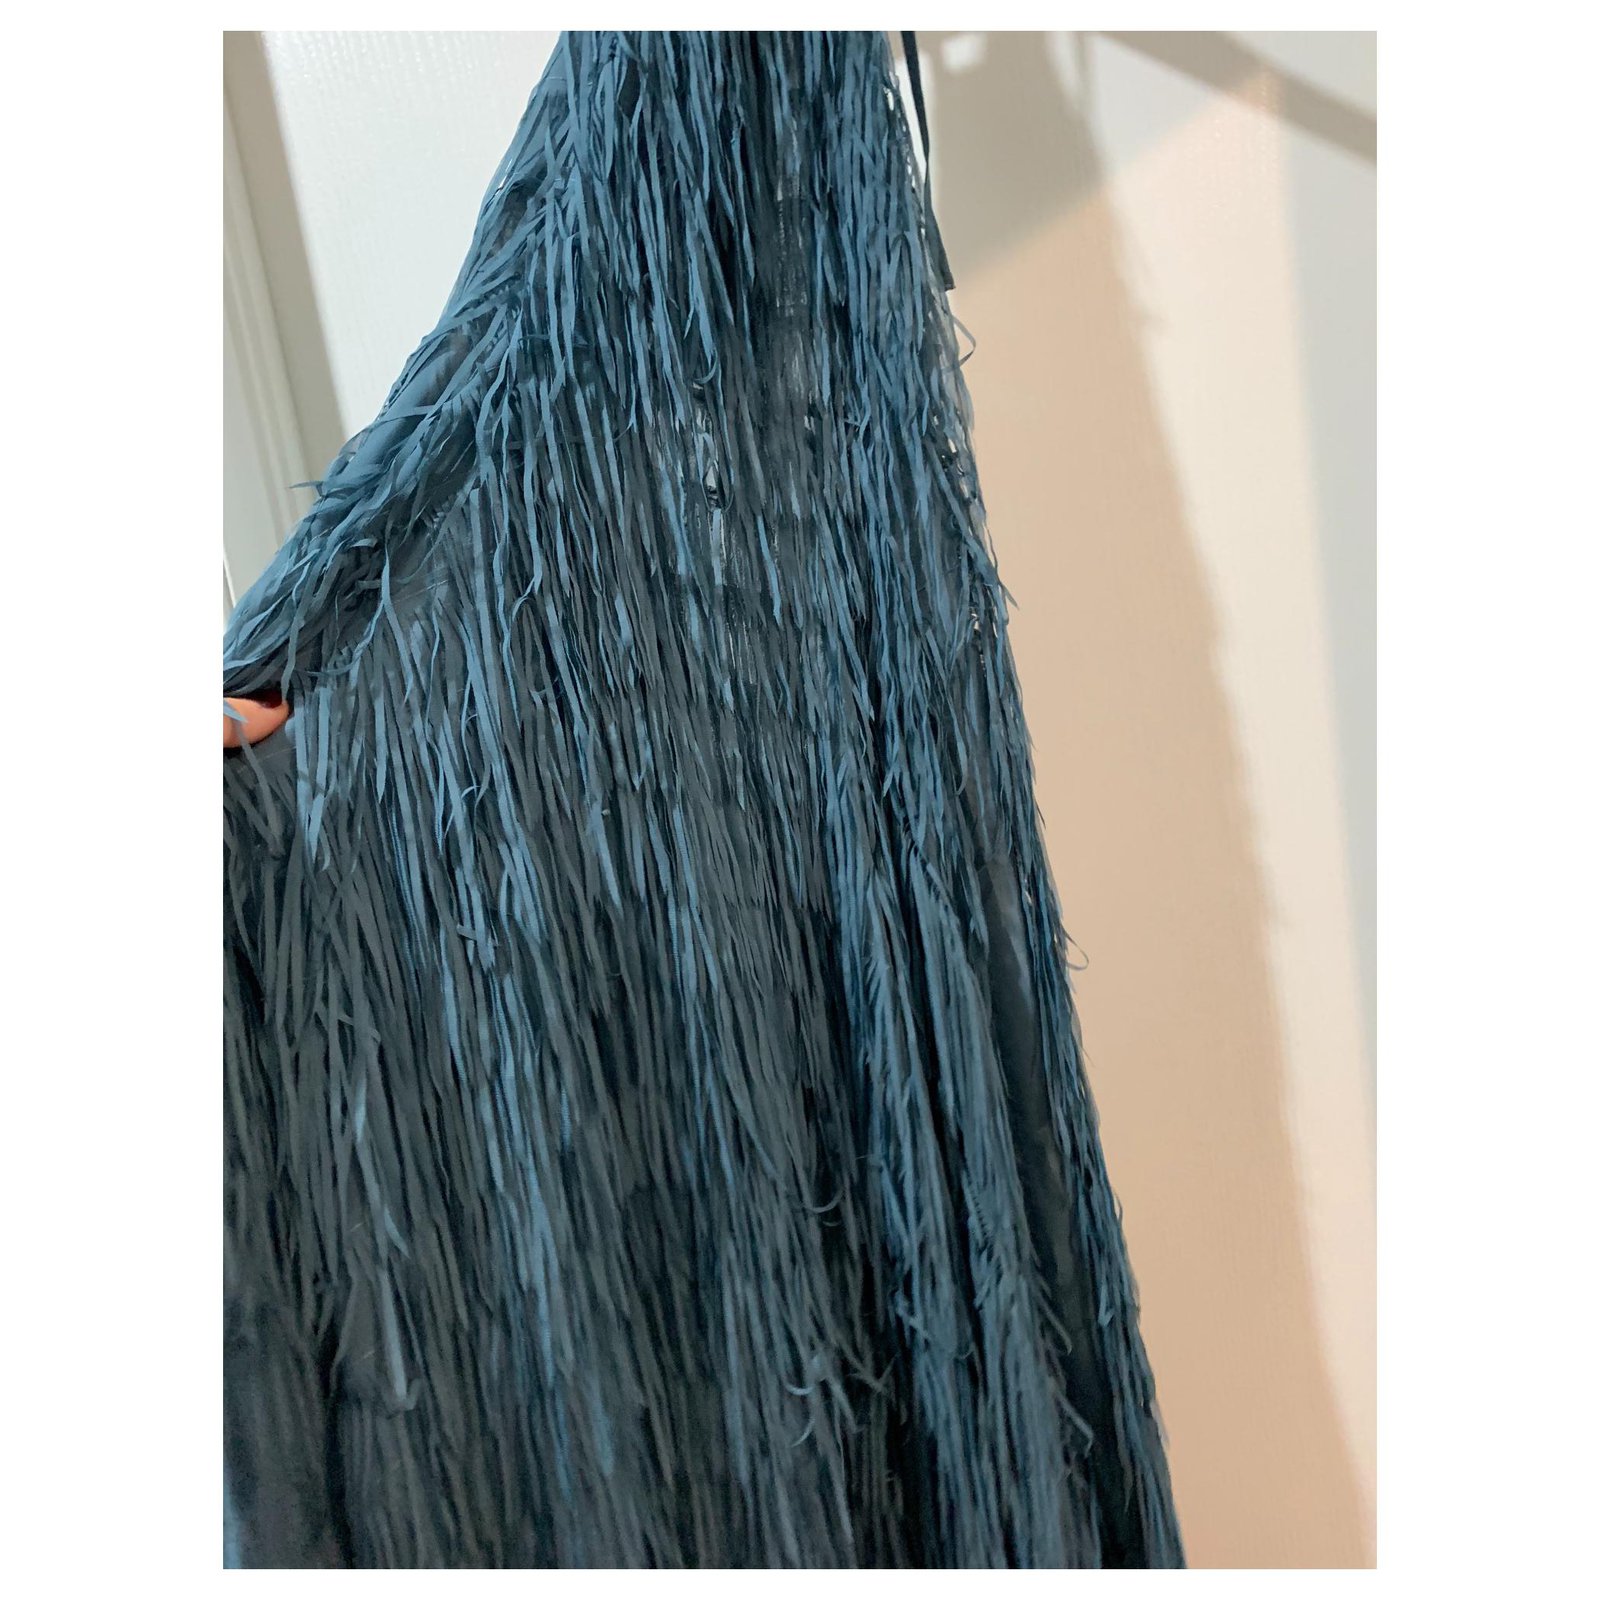 zara blue fringe dress